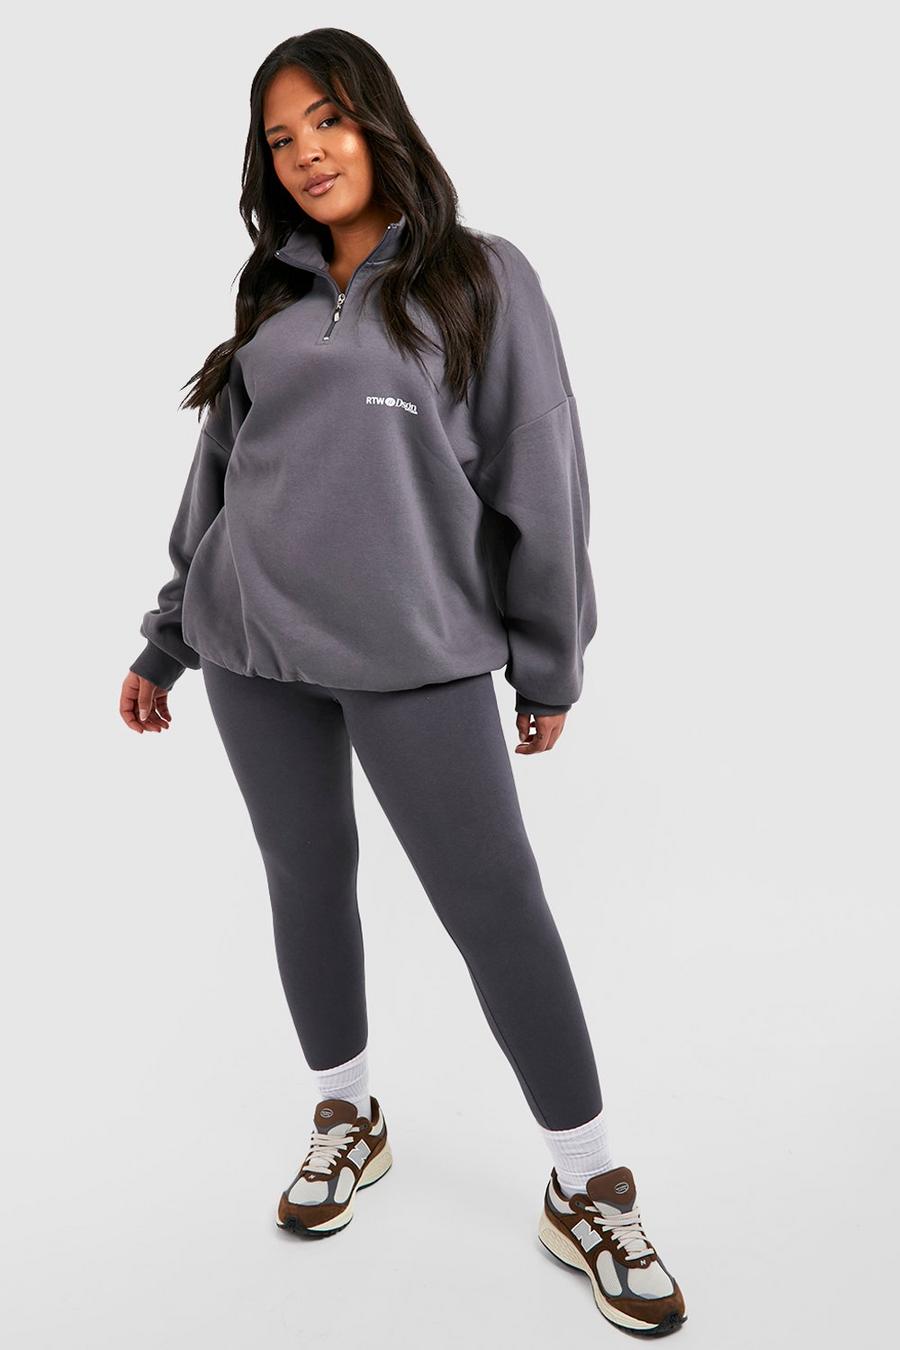 Charcoal Grey Oversized Dsgn Half Zip Sweatshirt And Legging Set